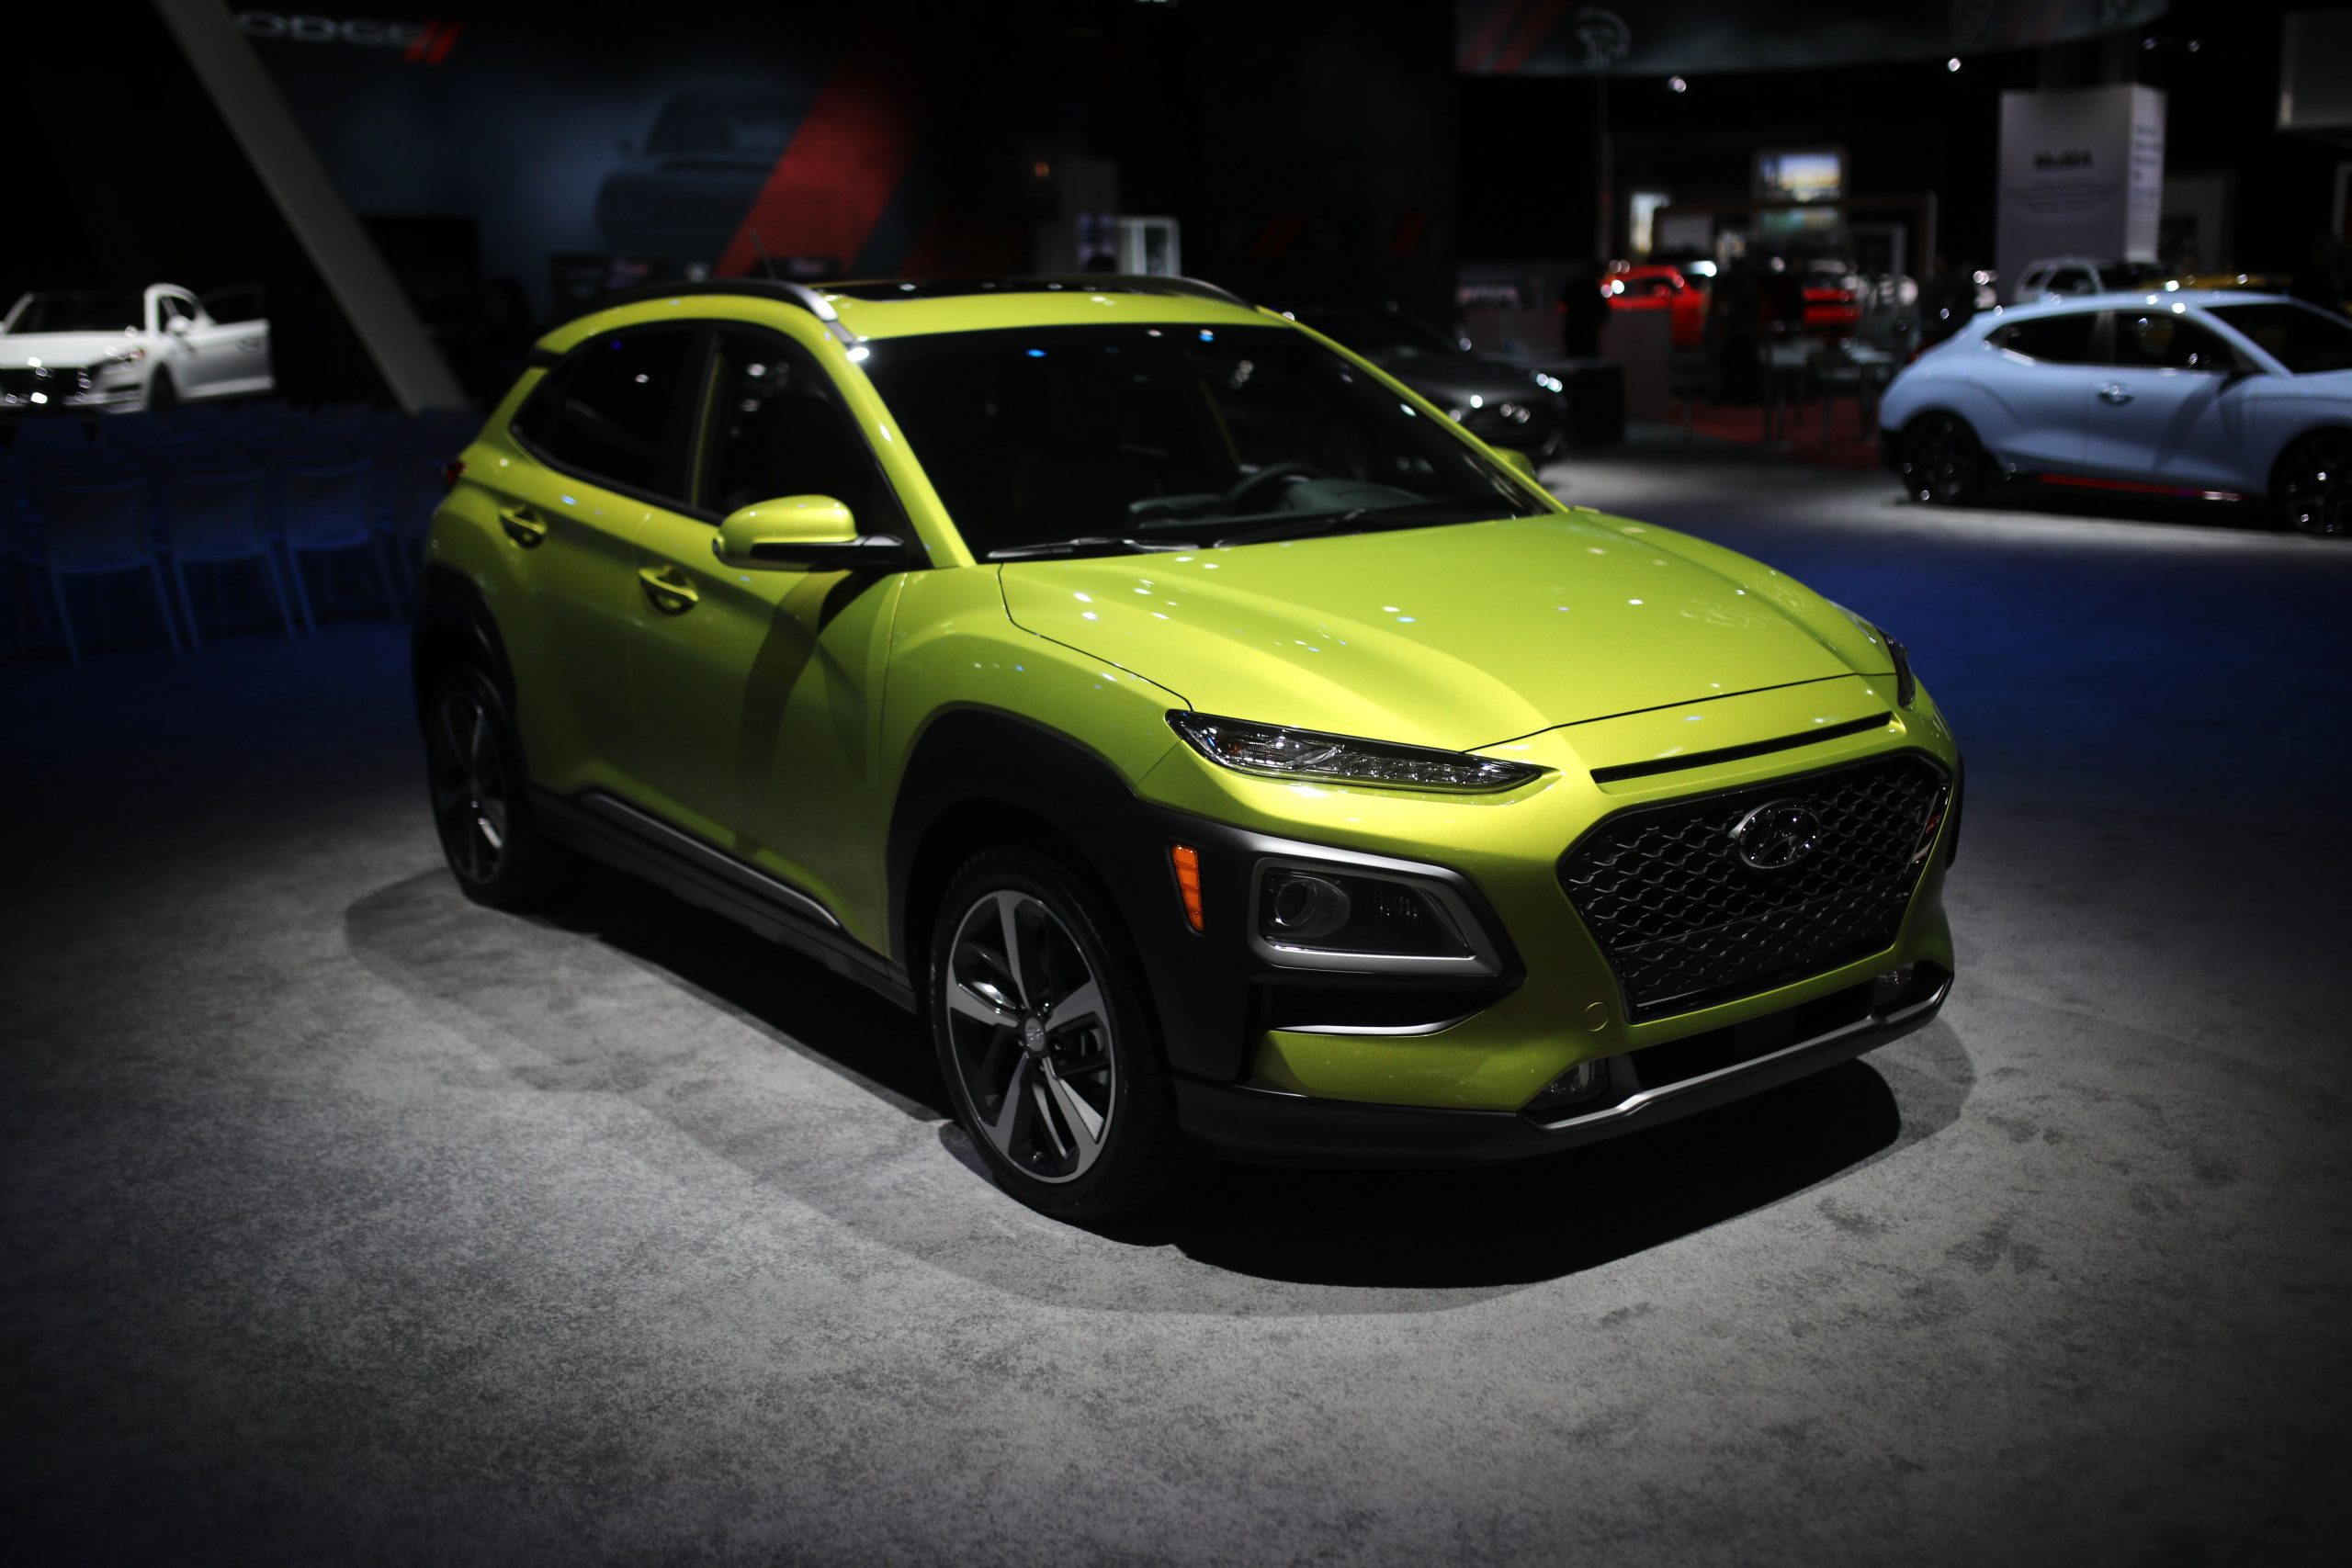 Hyundai Kona is on display during the New York Autoshow